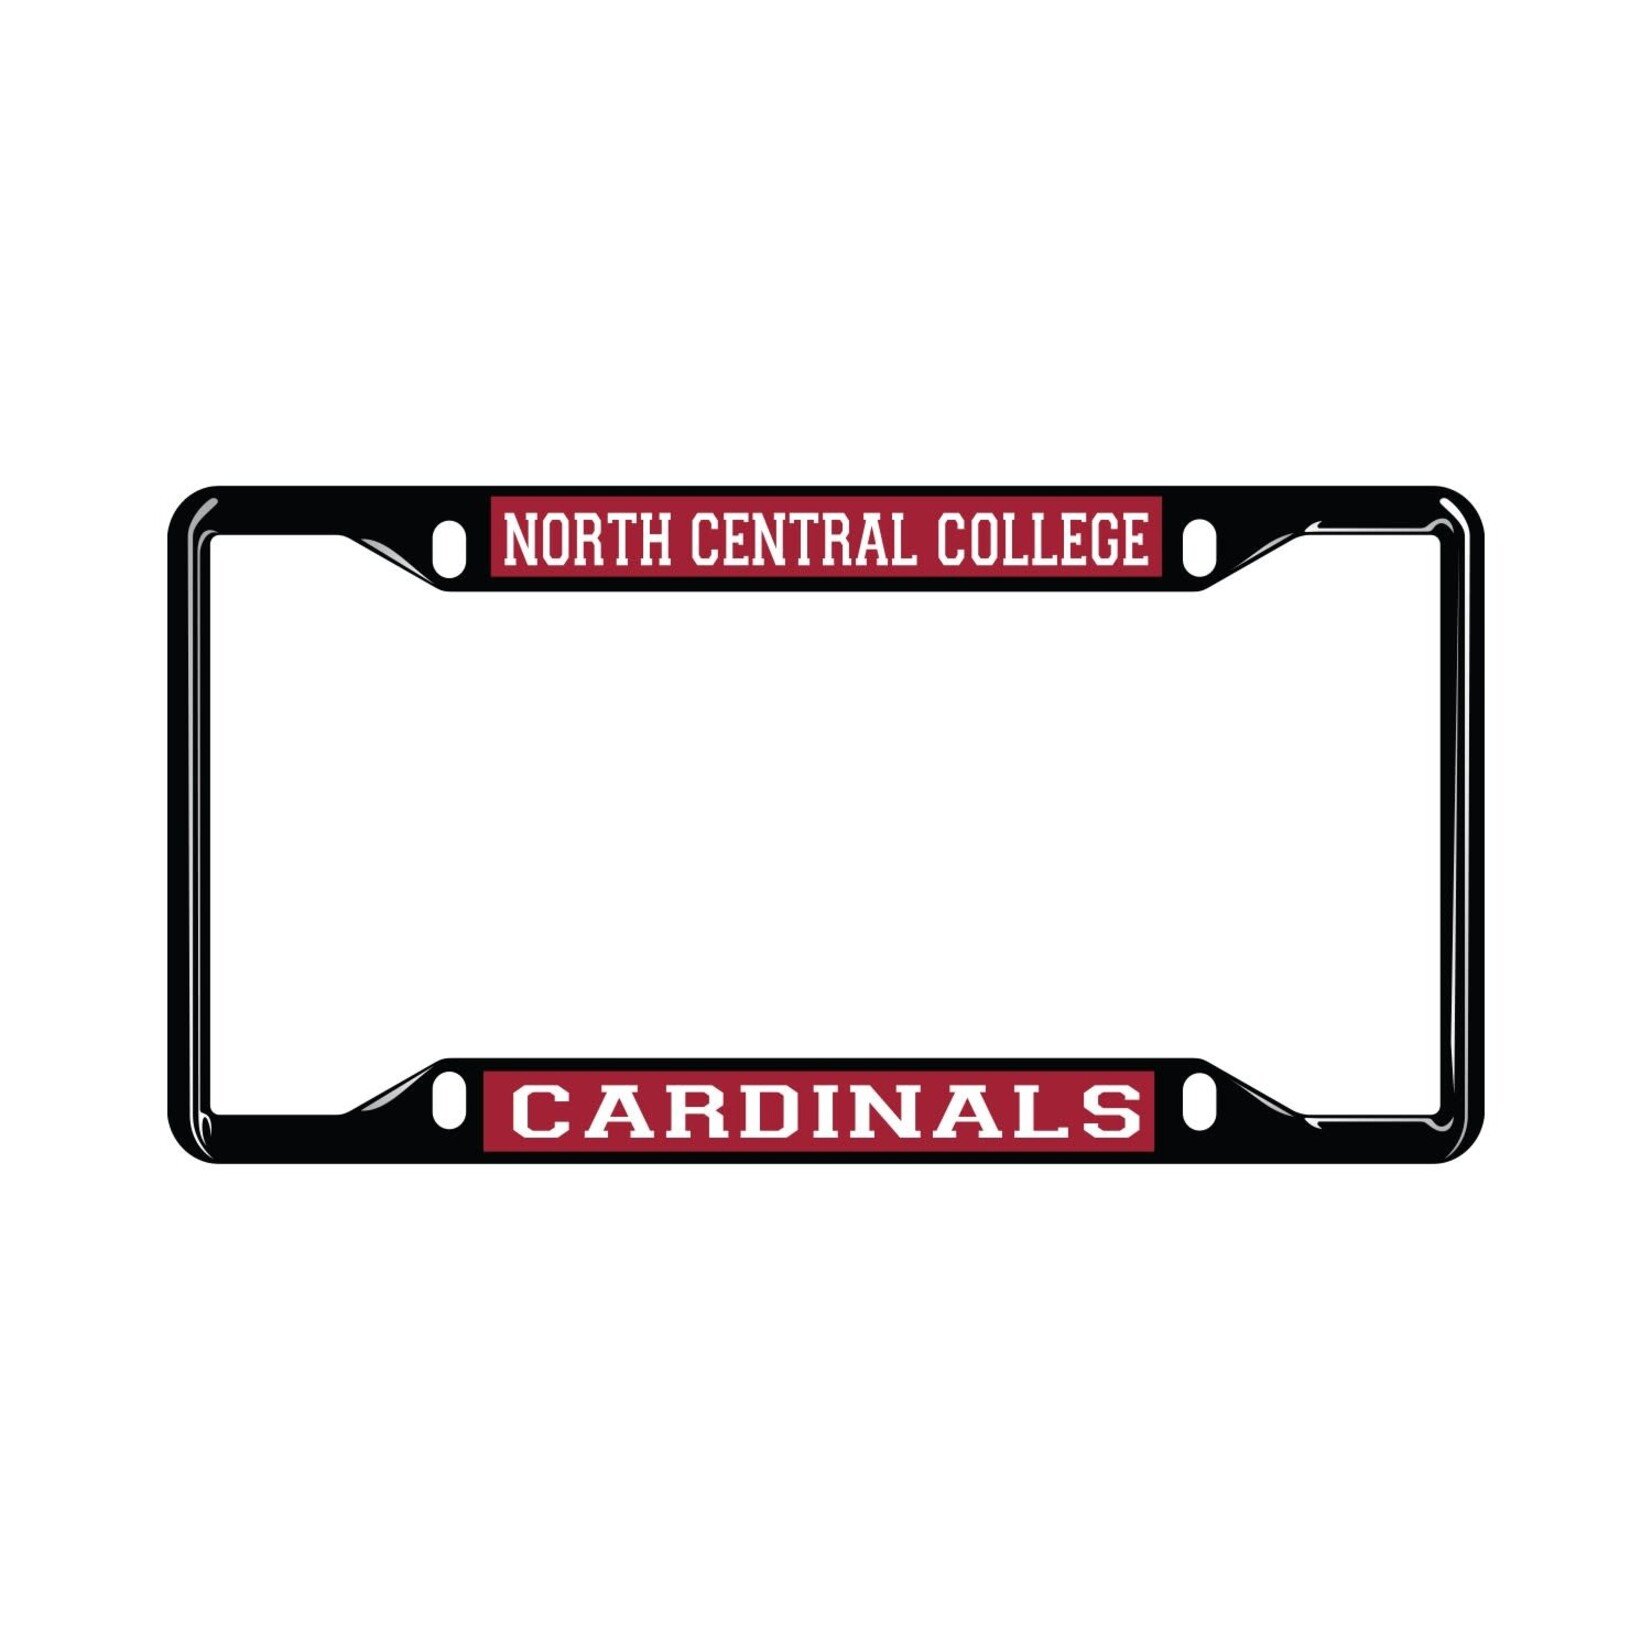 Jardine Associates License Plate frame in black - North Central College Cardinals